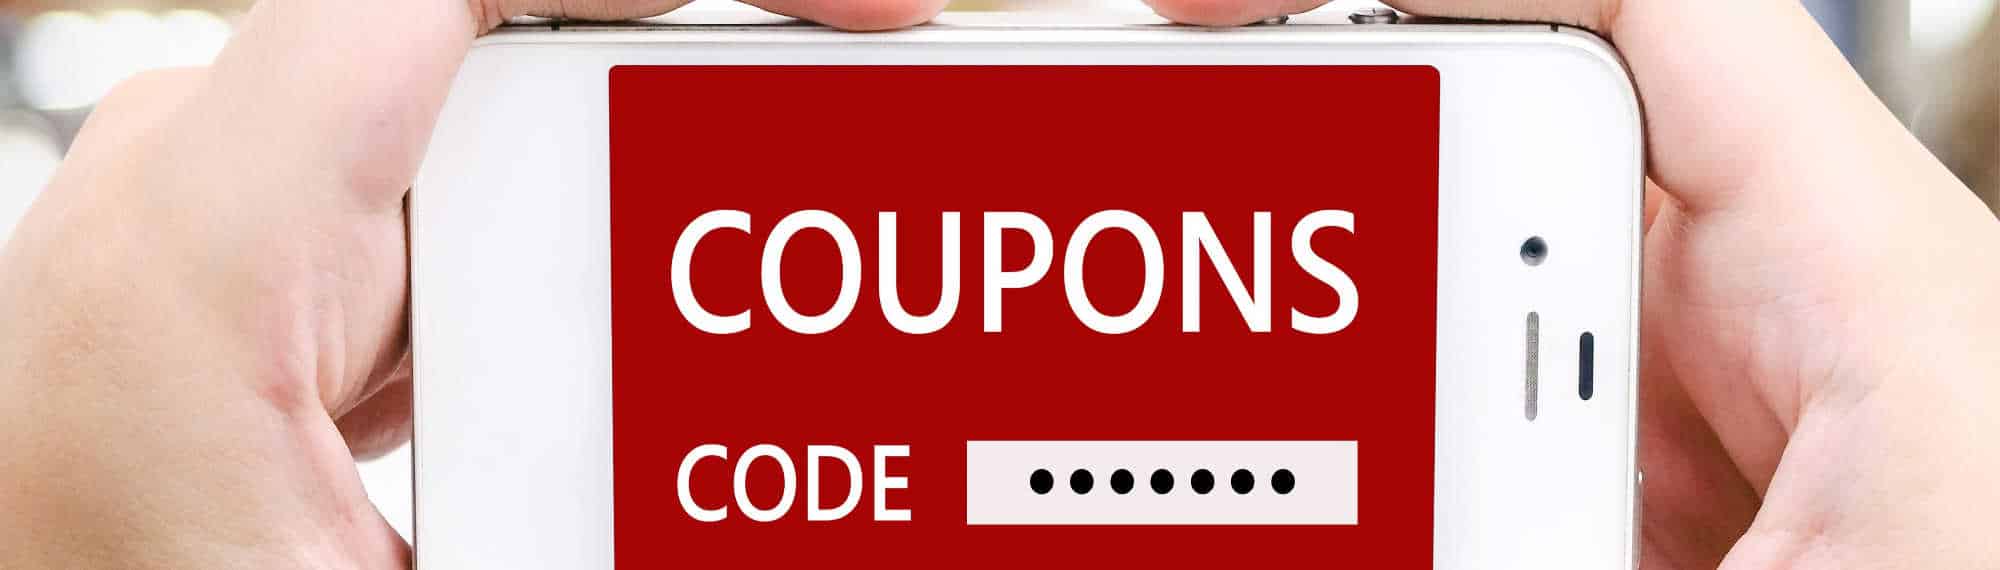 image of maui wowee kratom coupon code